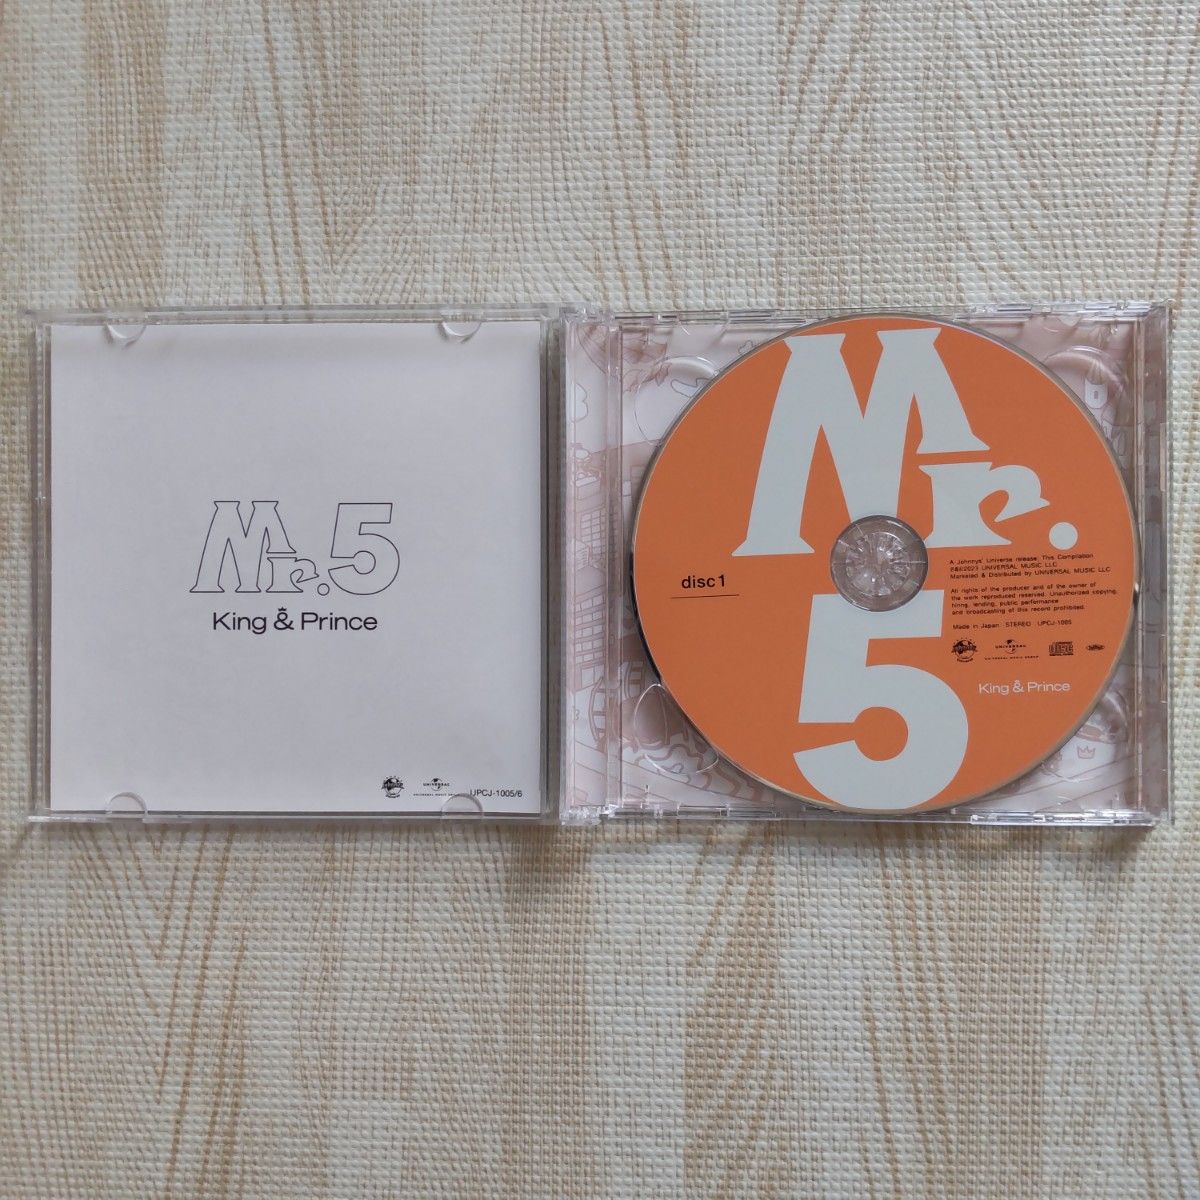 King & Prince≪Mr 5≫CDアルバム 通常盤 2CD